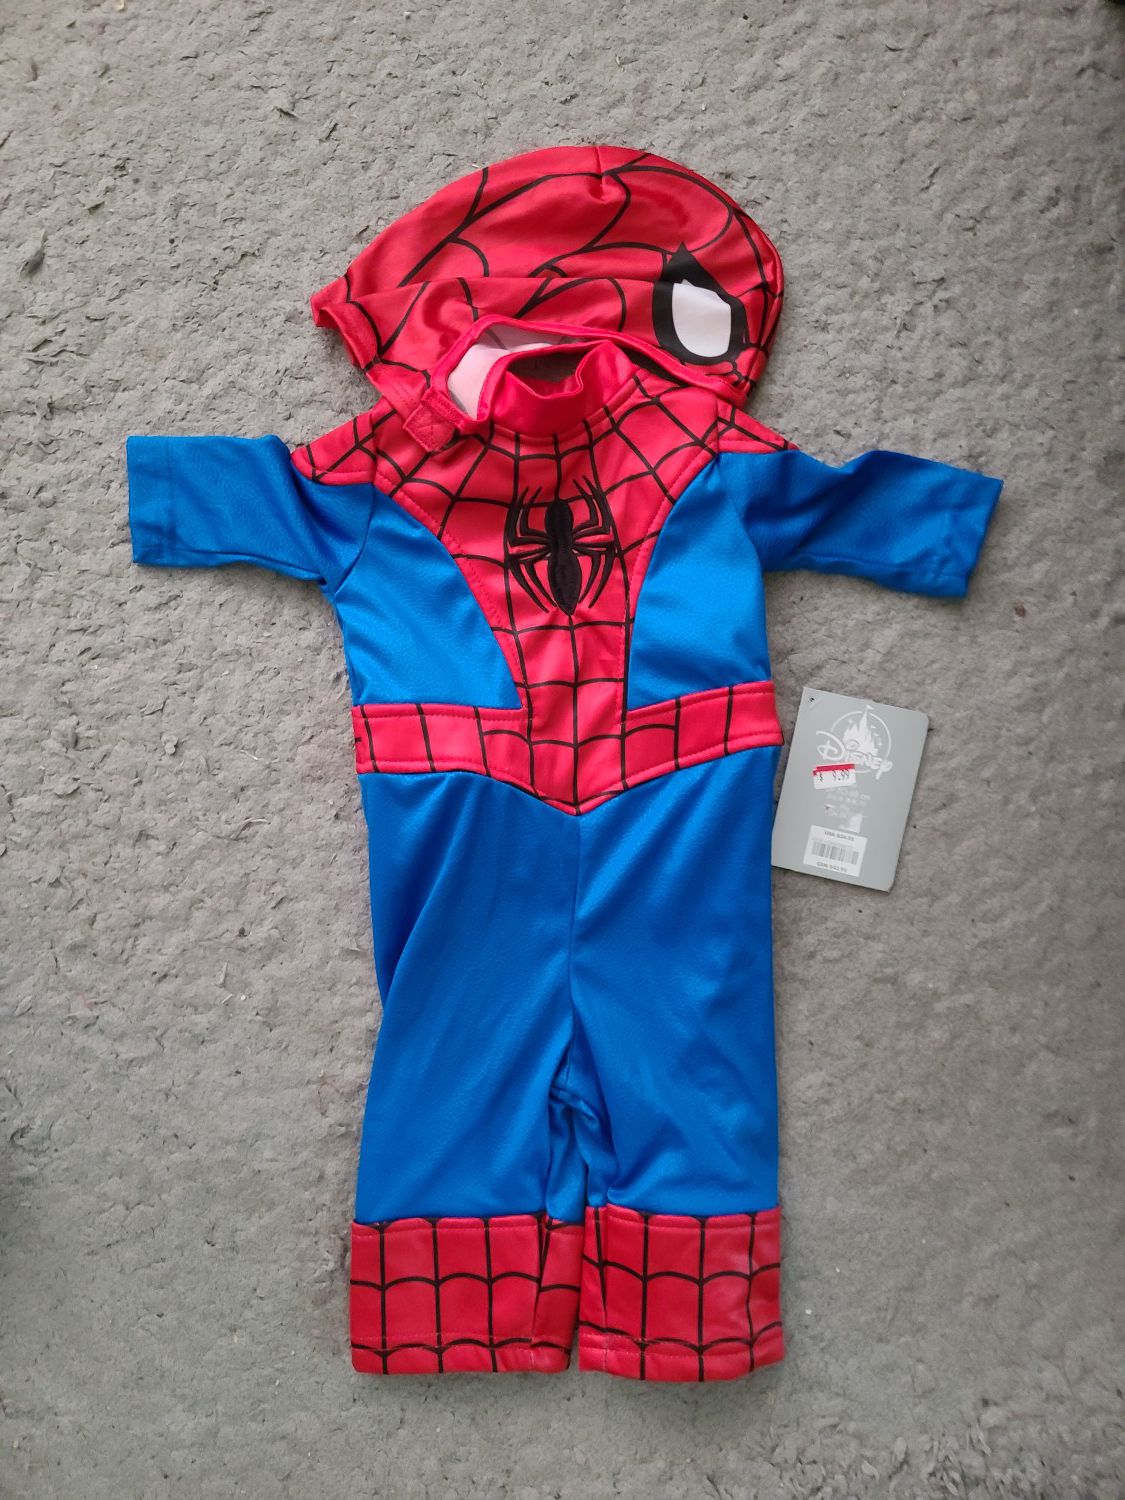 Spider-Man 3-6 month Disney store costume